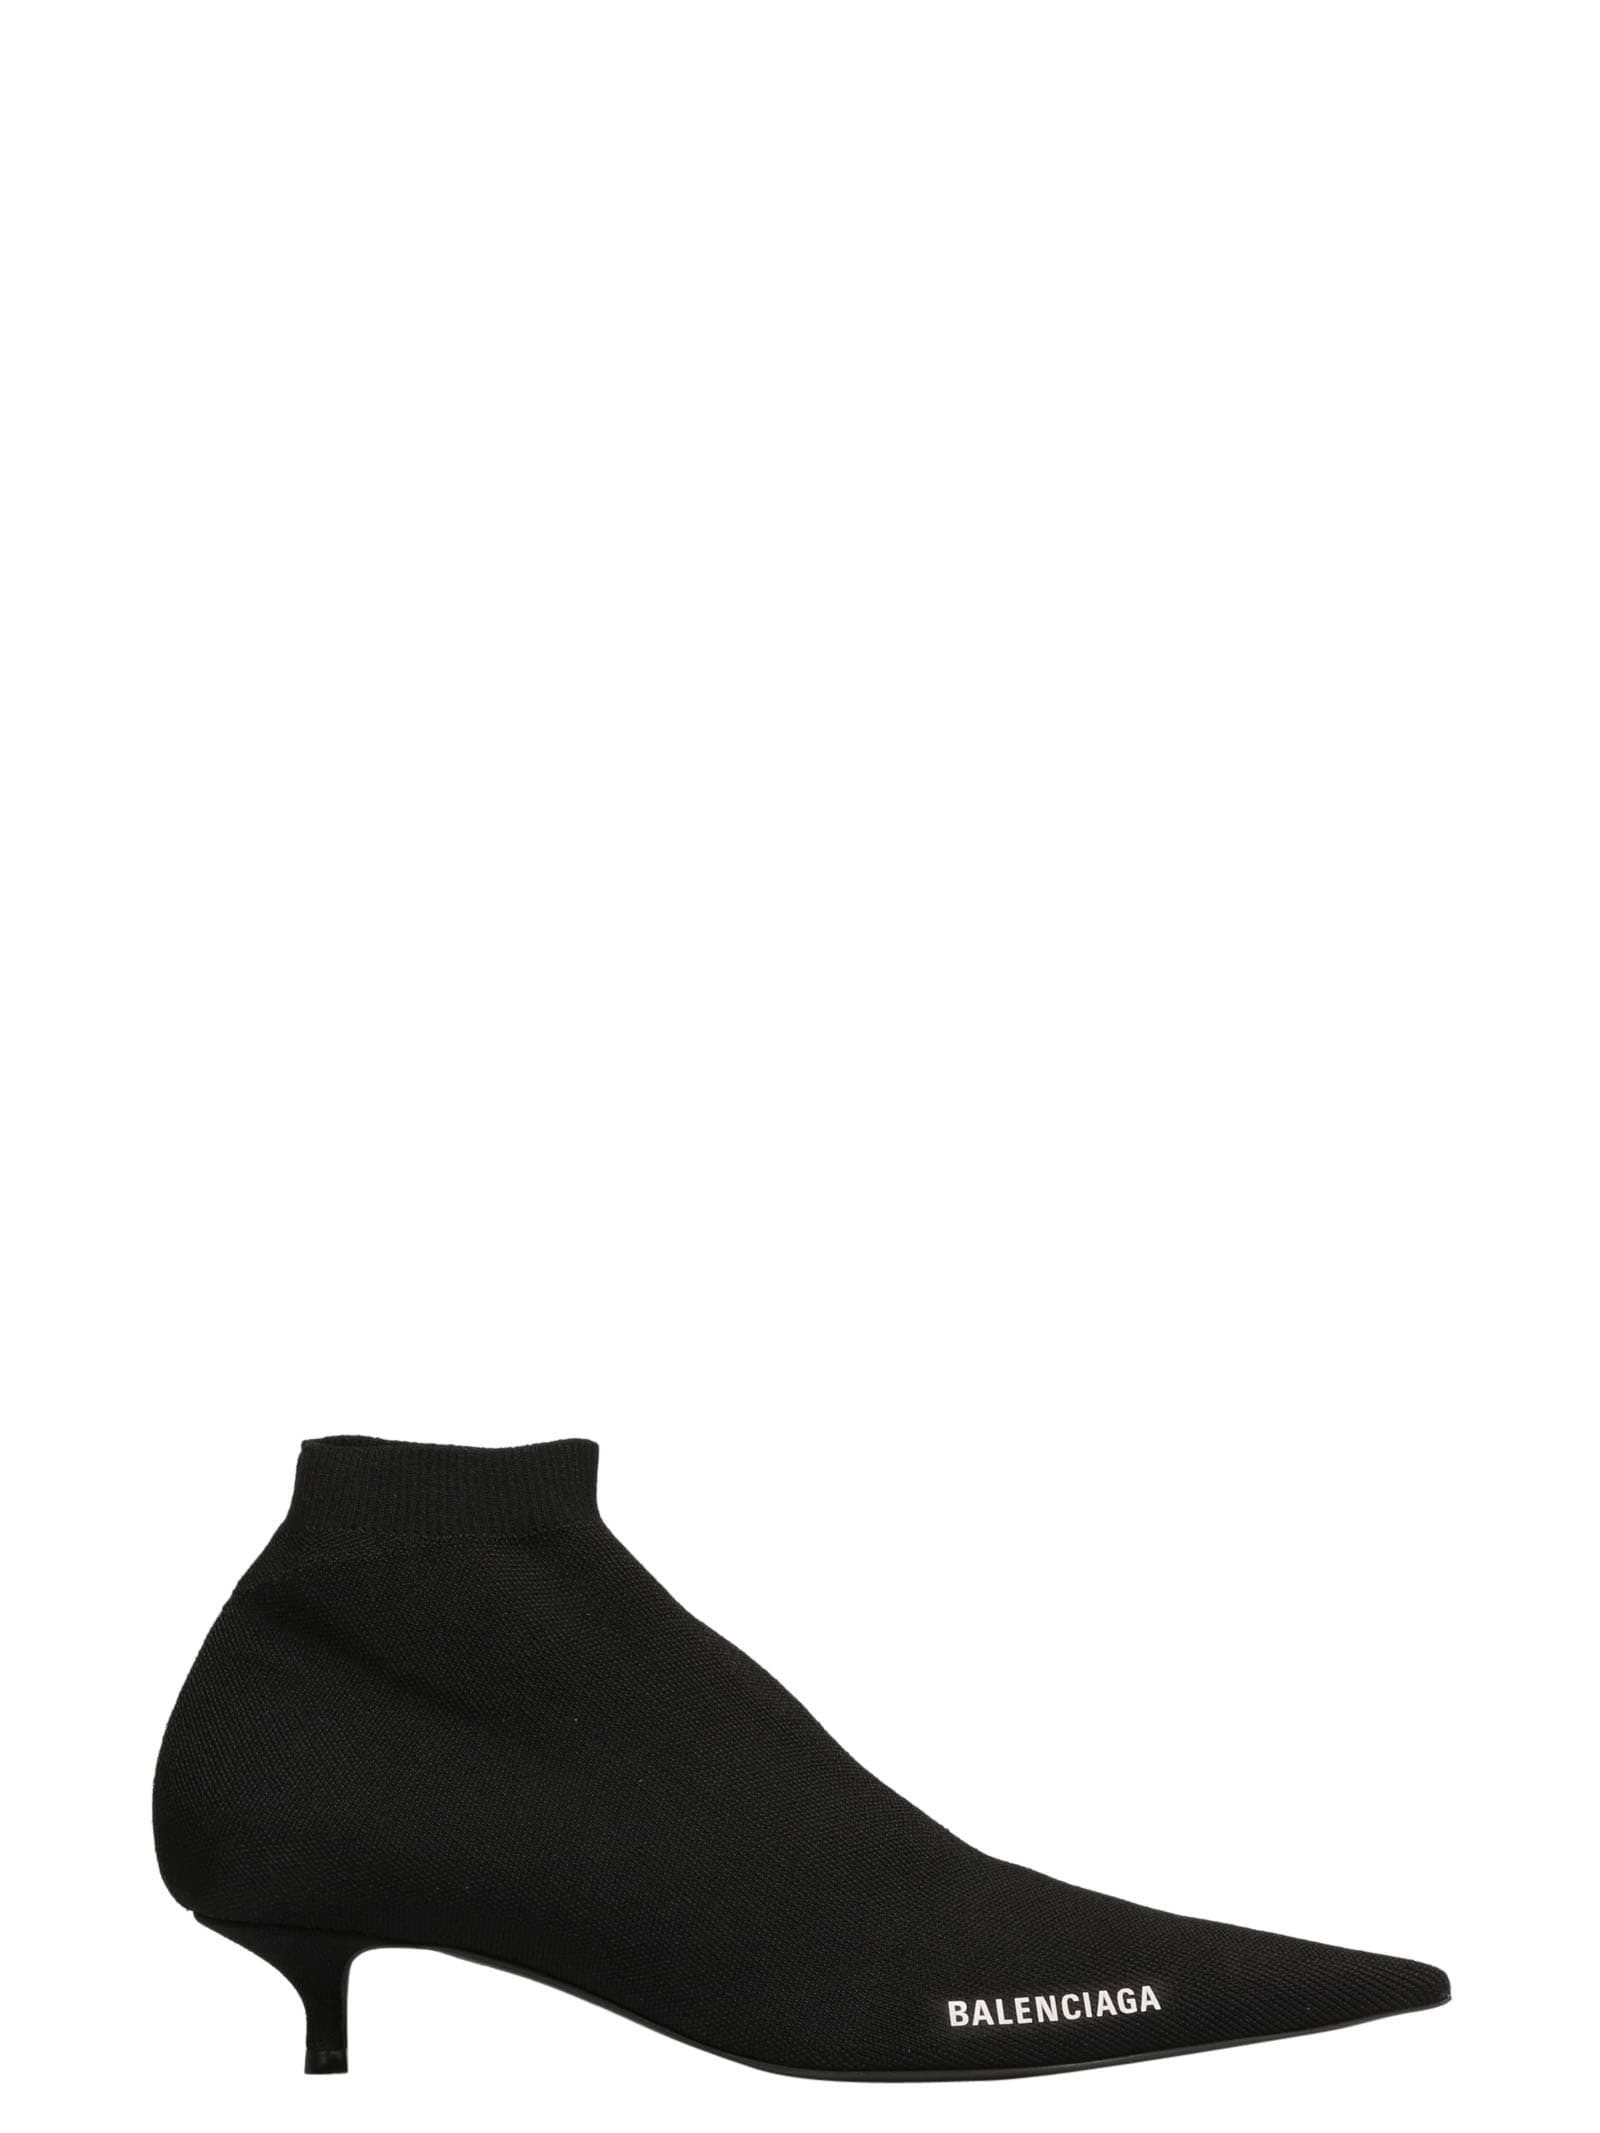 Buy Balenciaga Knit Boots online, shop Balenciaga shoes with free shipping